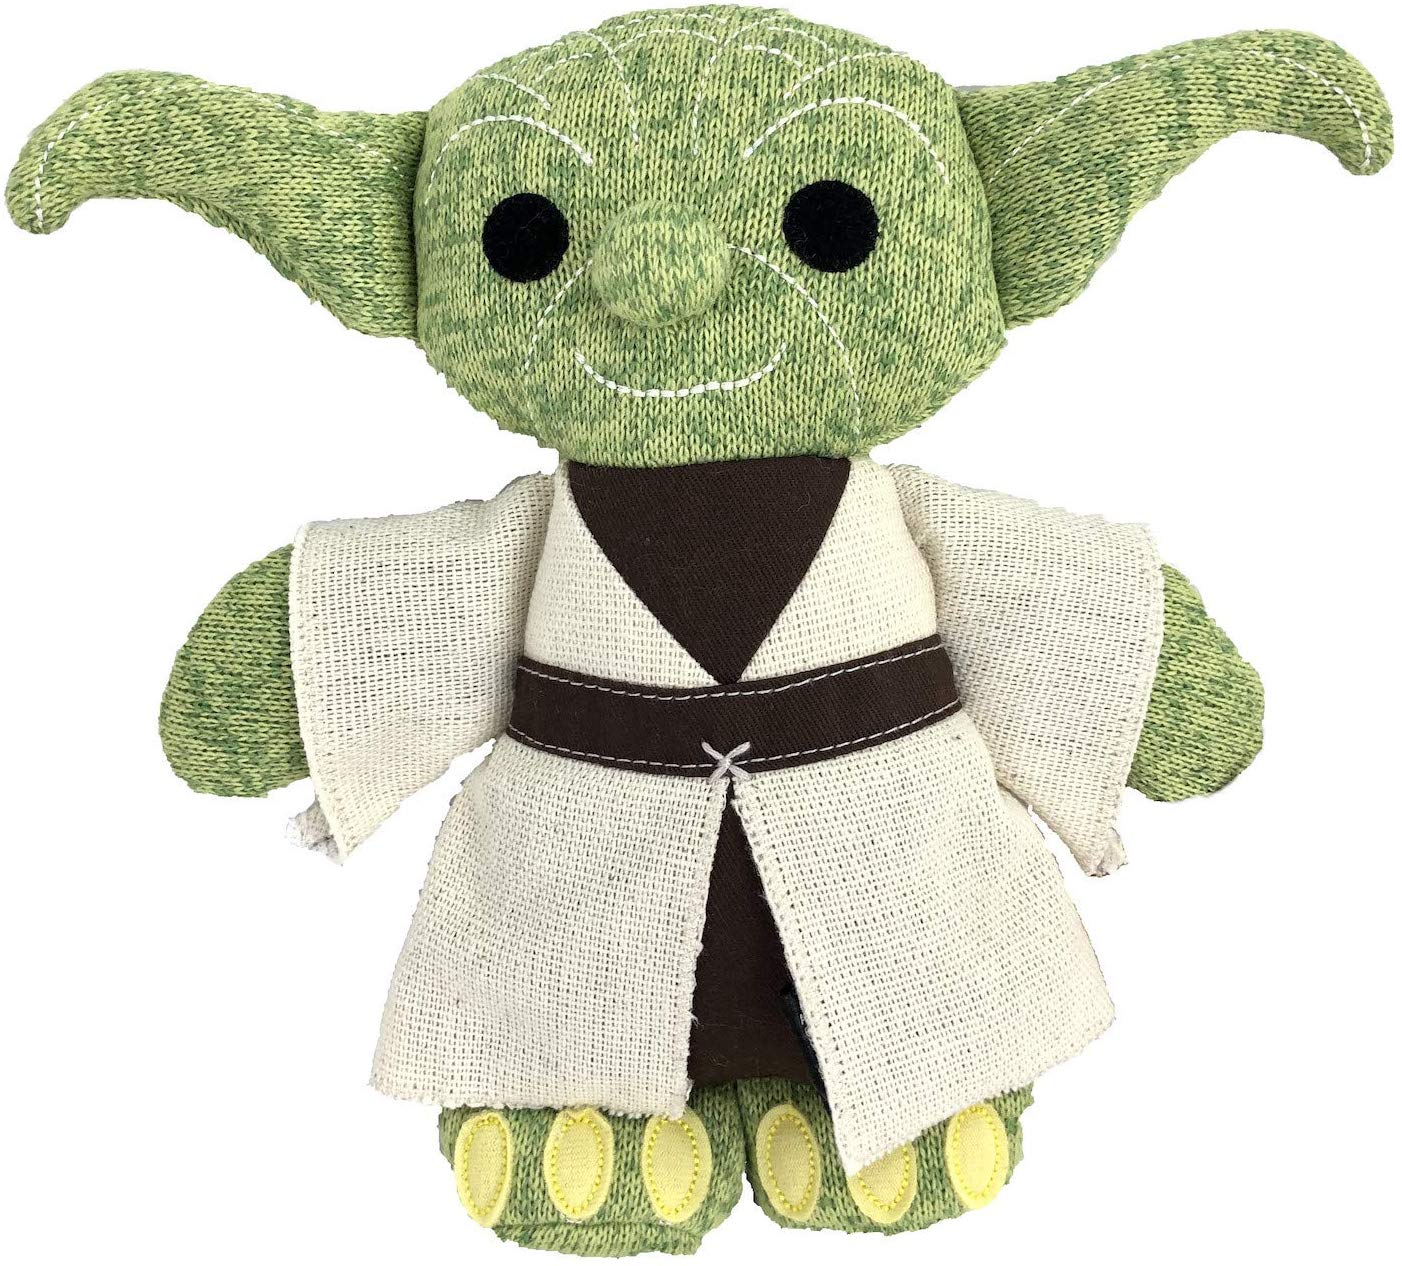 Disney Parks Star Wars Galaxy's Edge Yoda Plush New with Tag - image 1 of 3